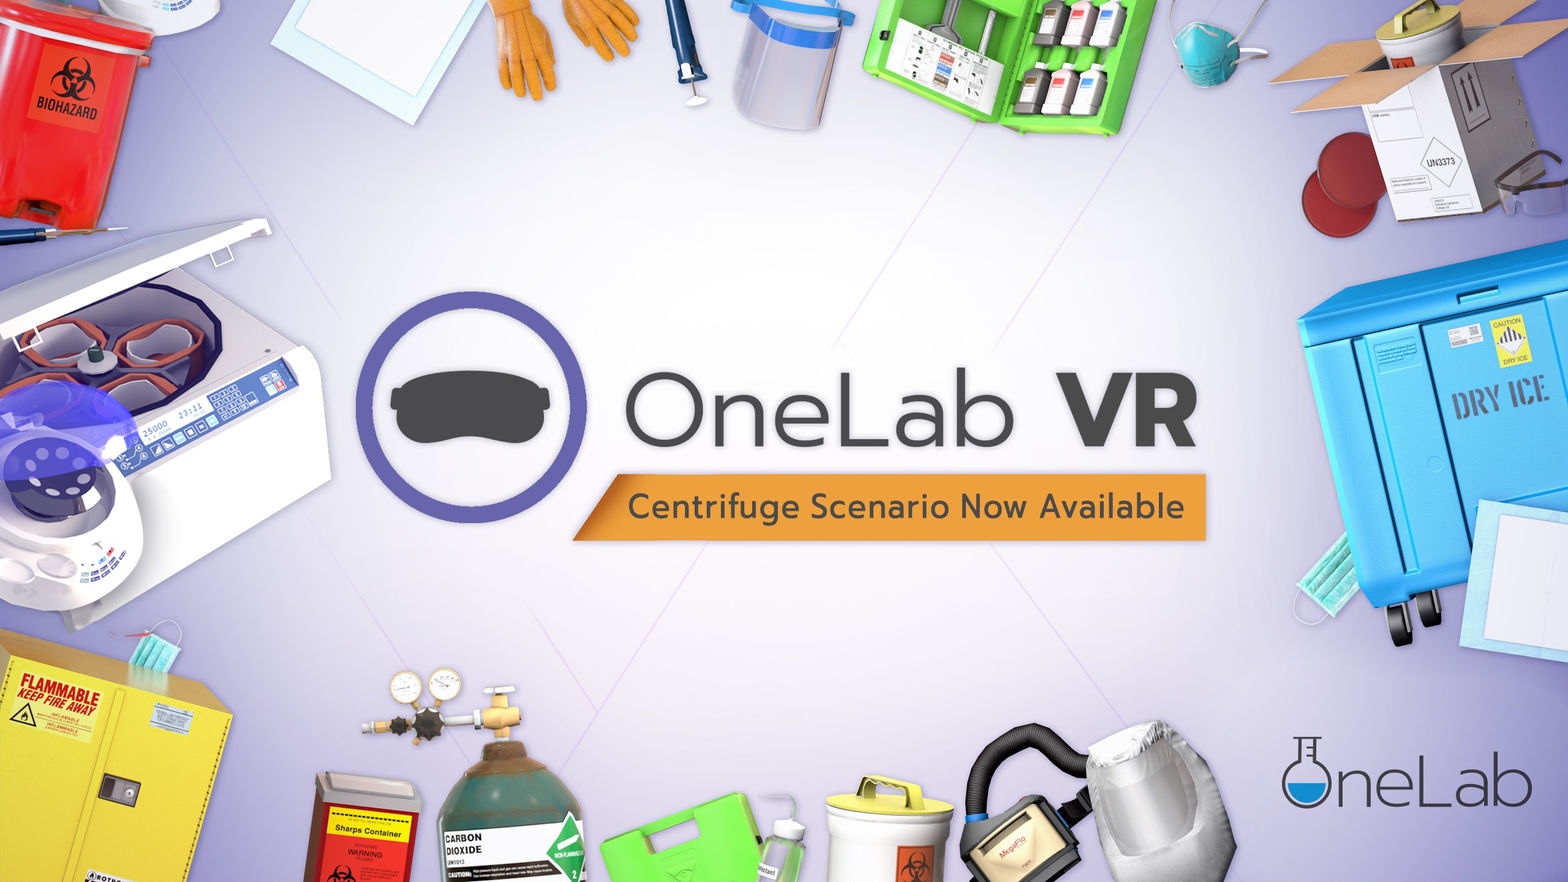 OneLab VR